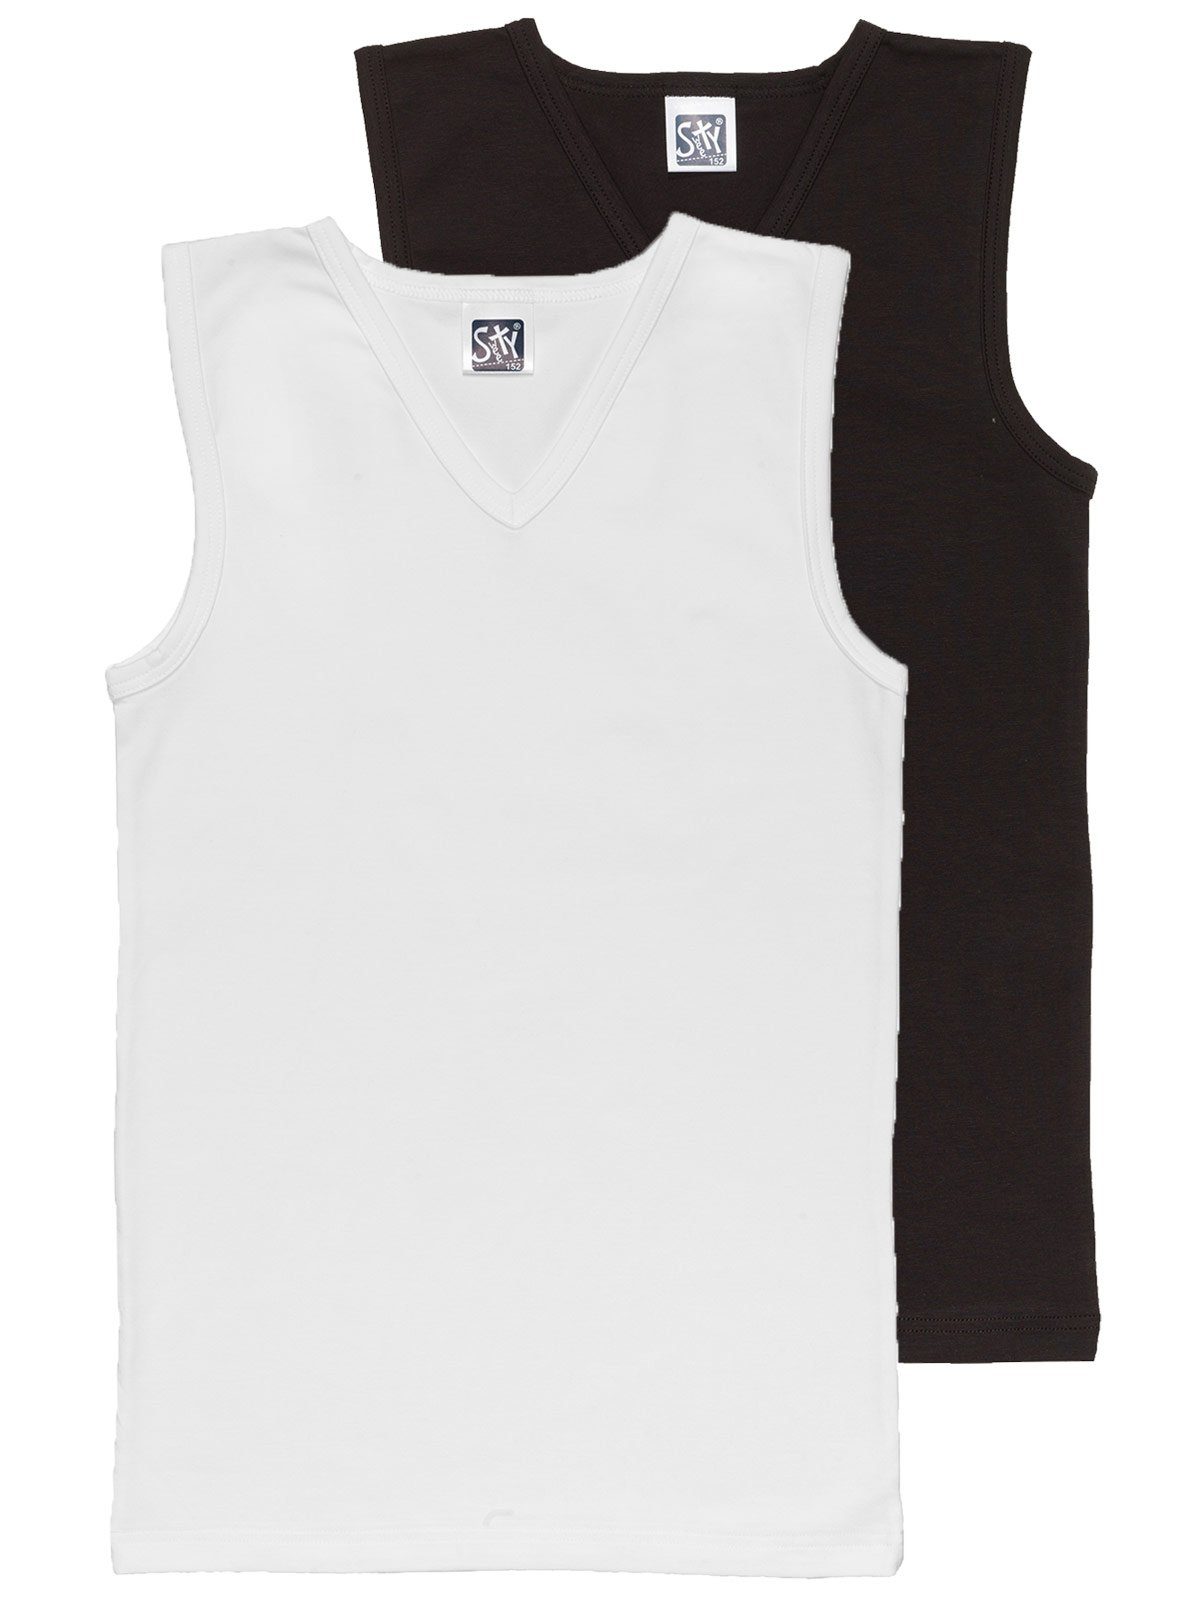 Sweety for Kids Unterhemd 2er Sparpack Knaben City Shirt Single Jersey (Spar-Set, 2-St) hohe Markenqualität schwarz weiss